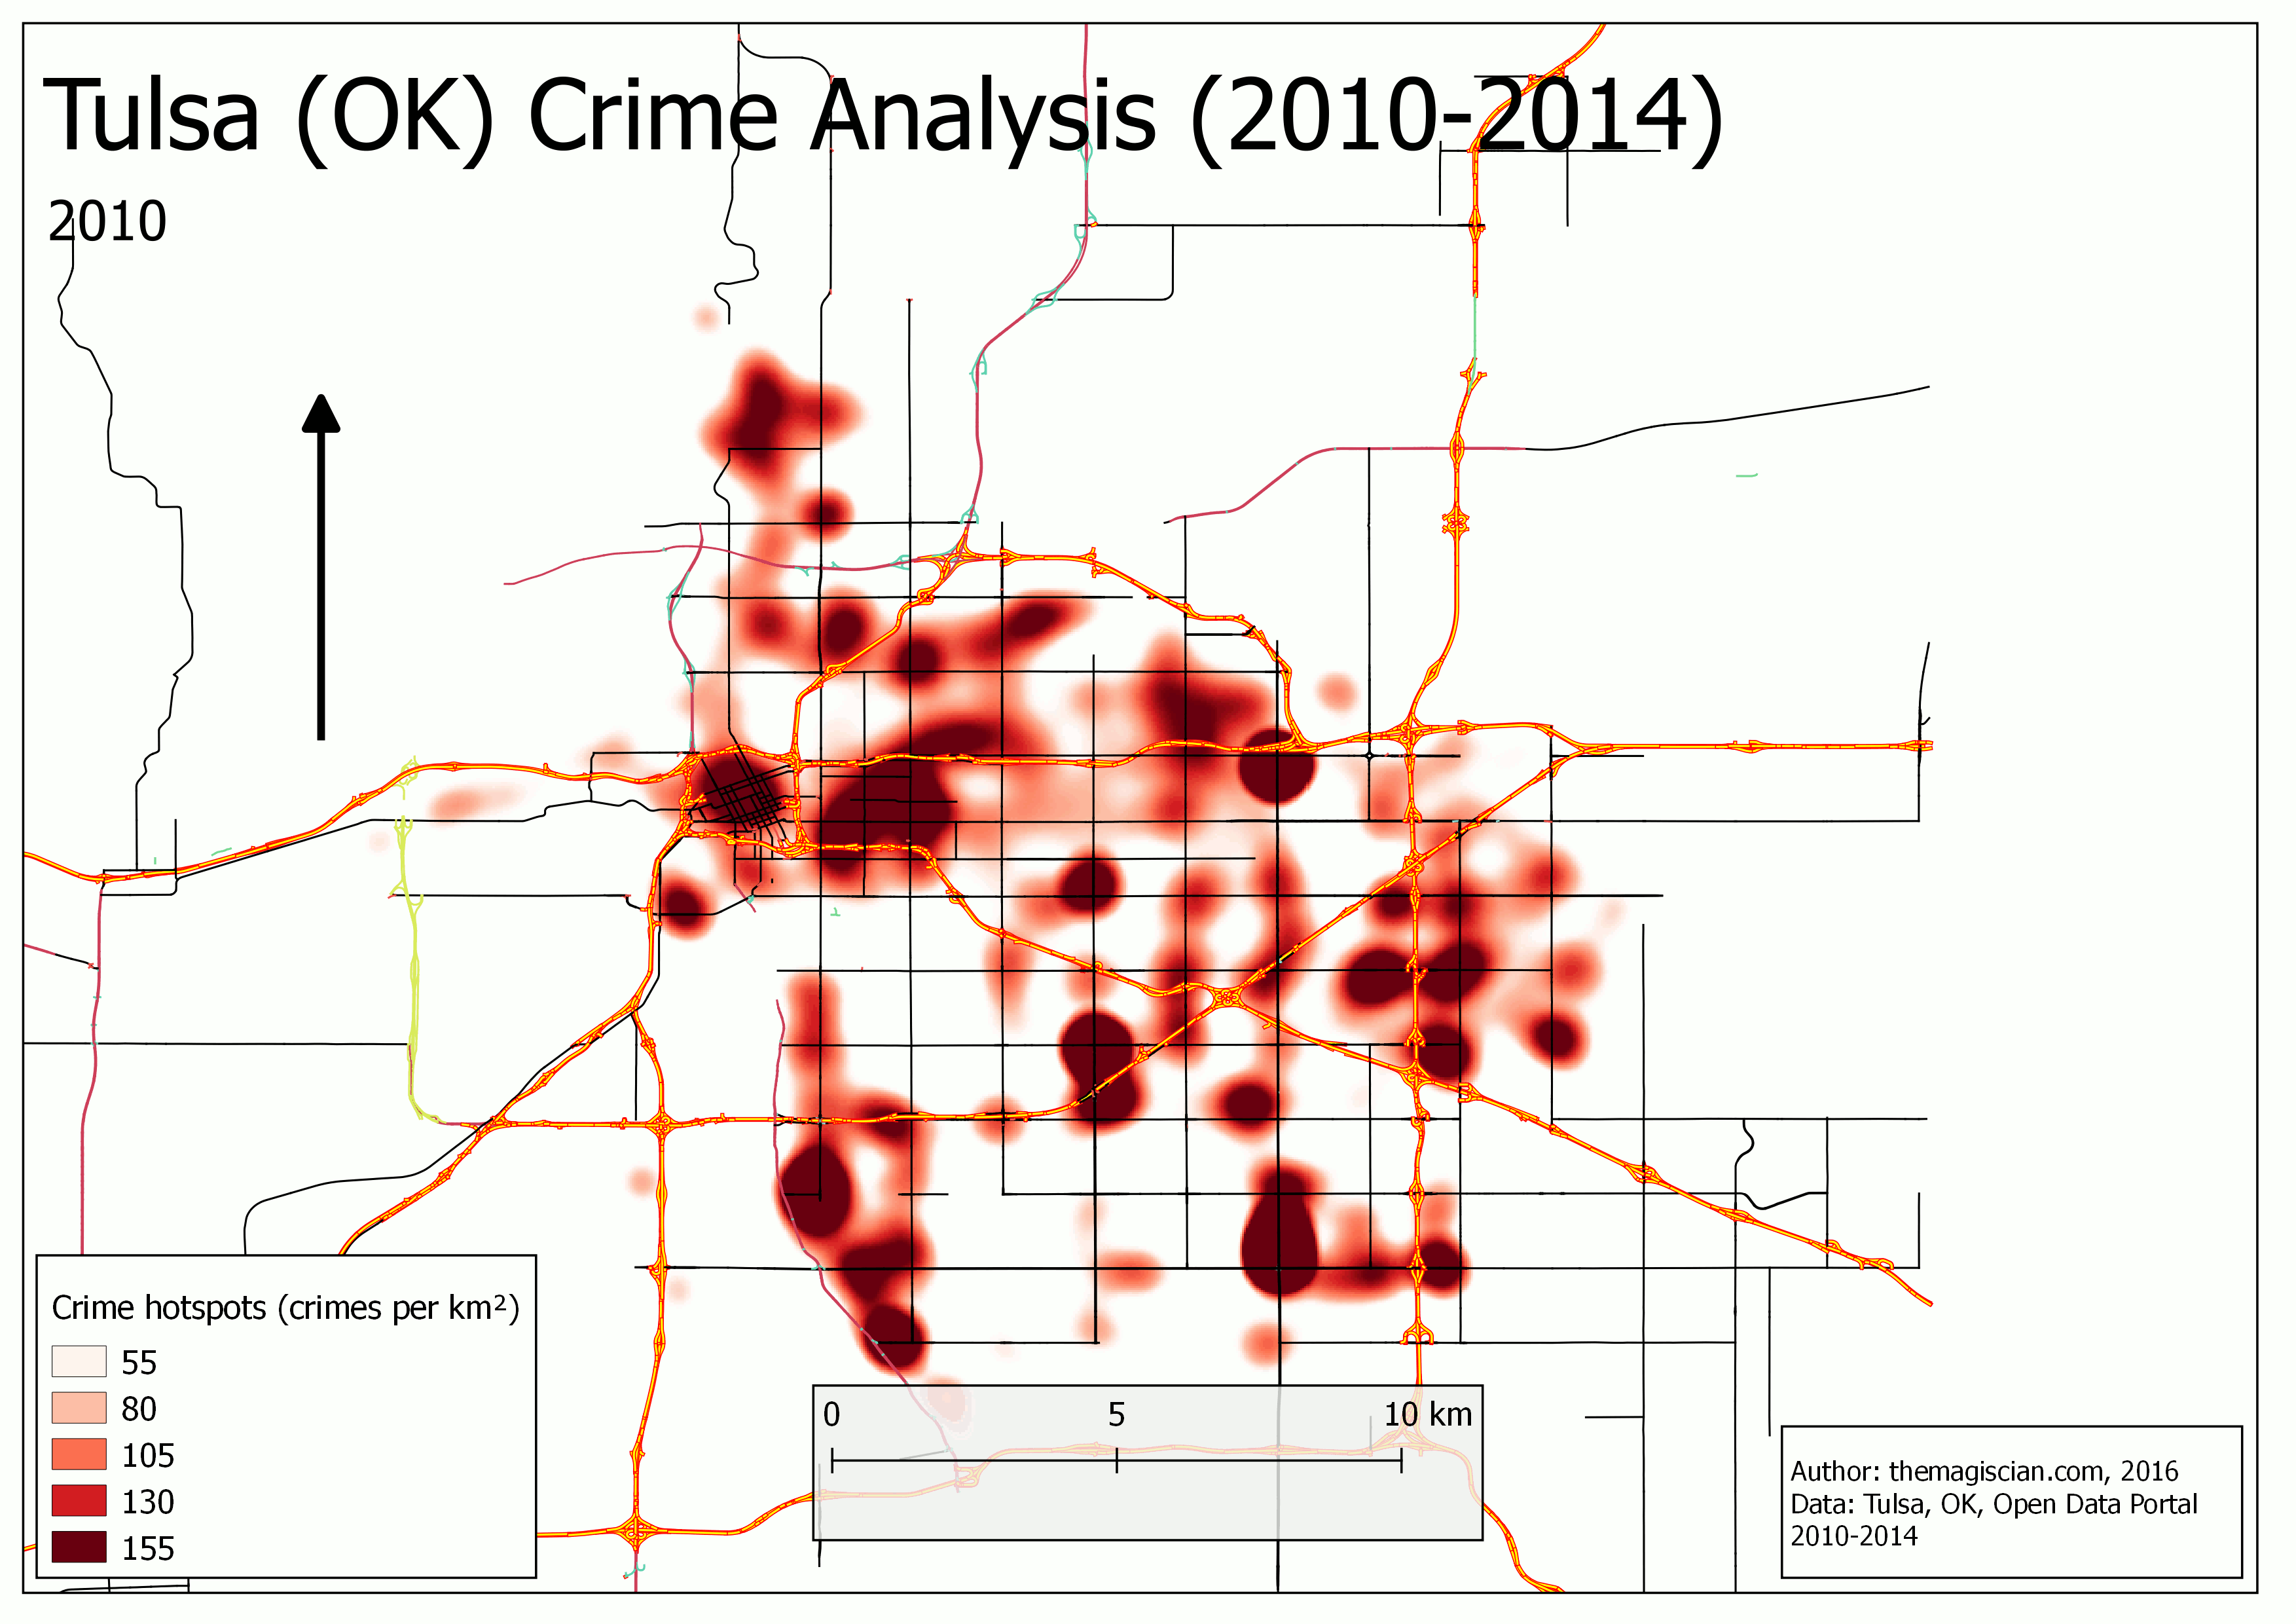 Total crimes in Tulsa 2010-2014